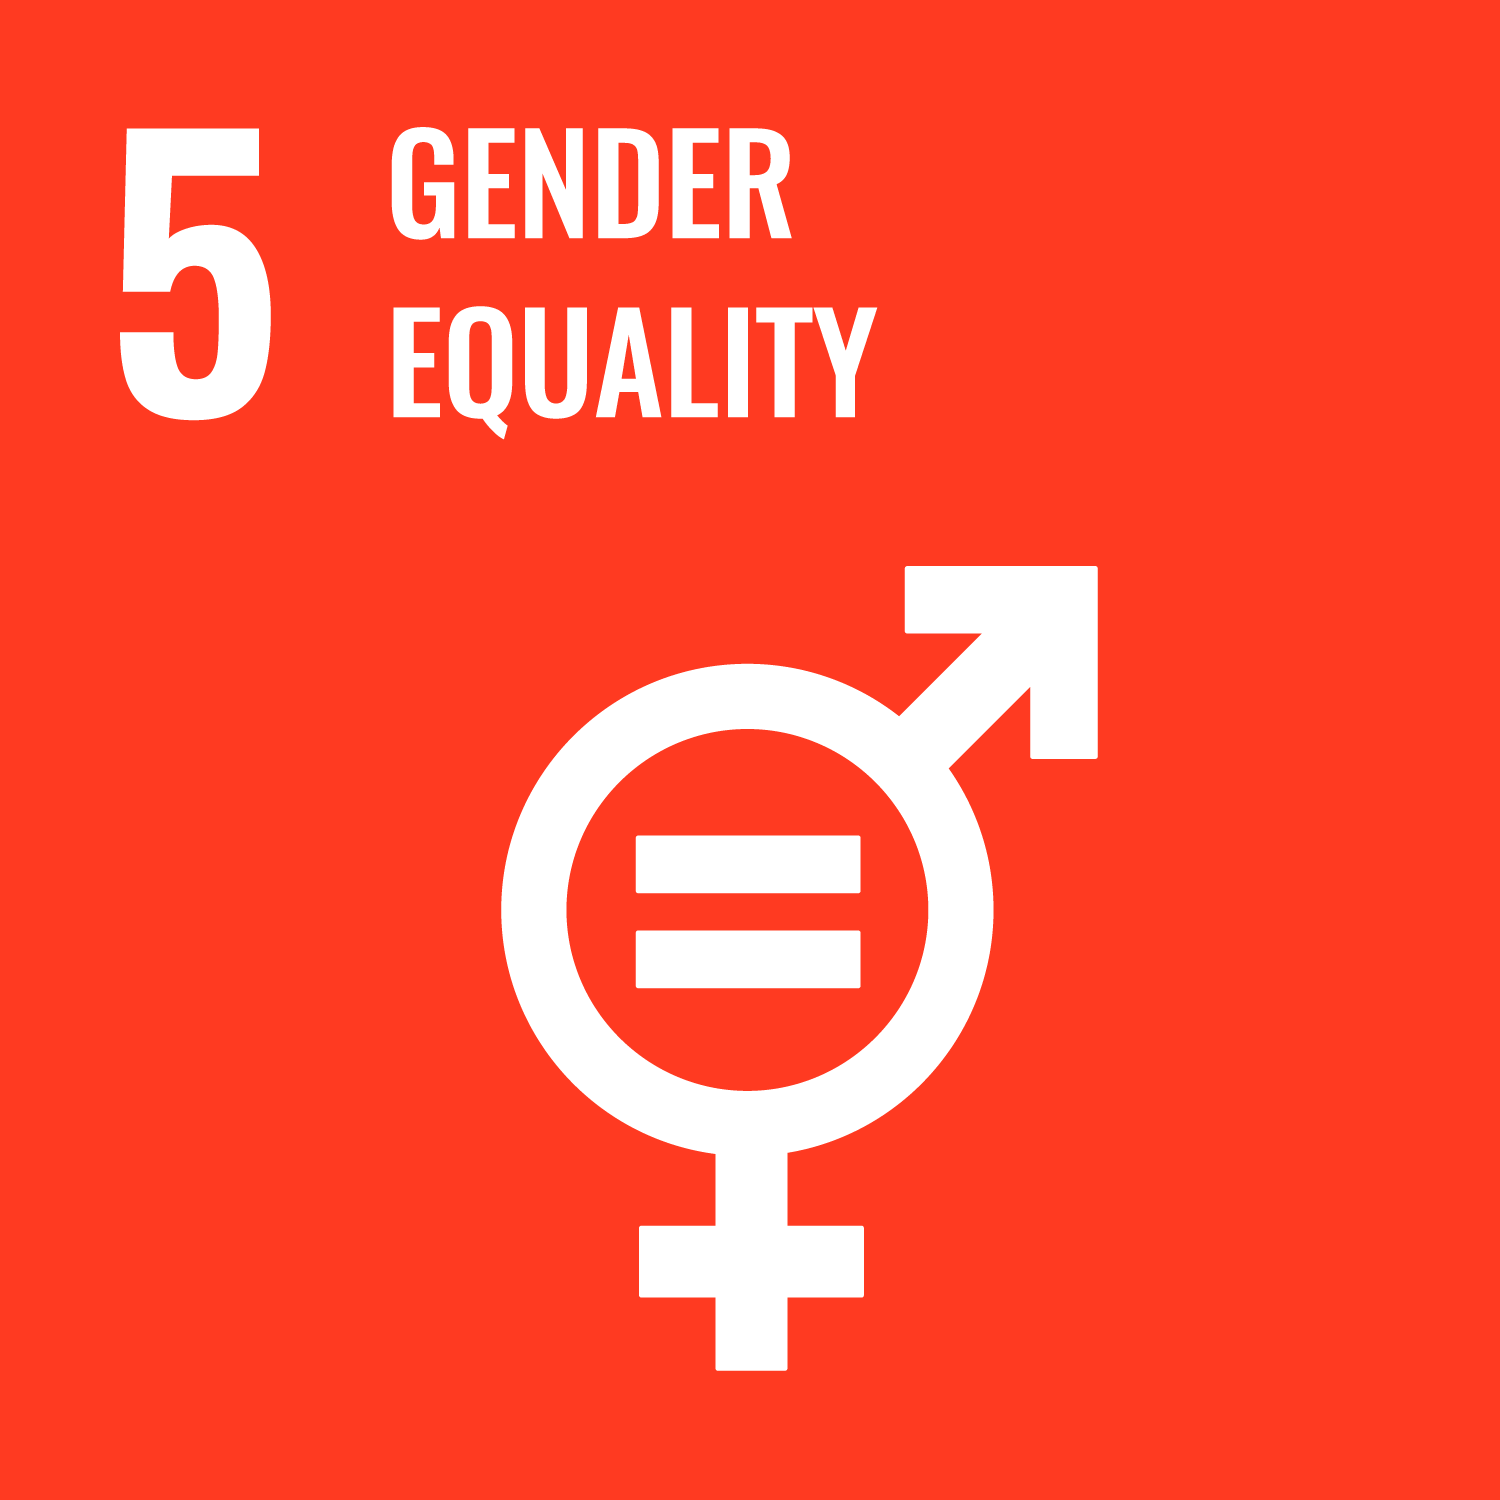 Goal 5:<span> Gender Equality</span>